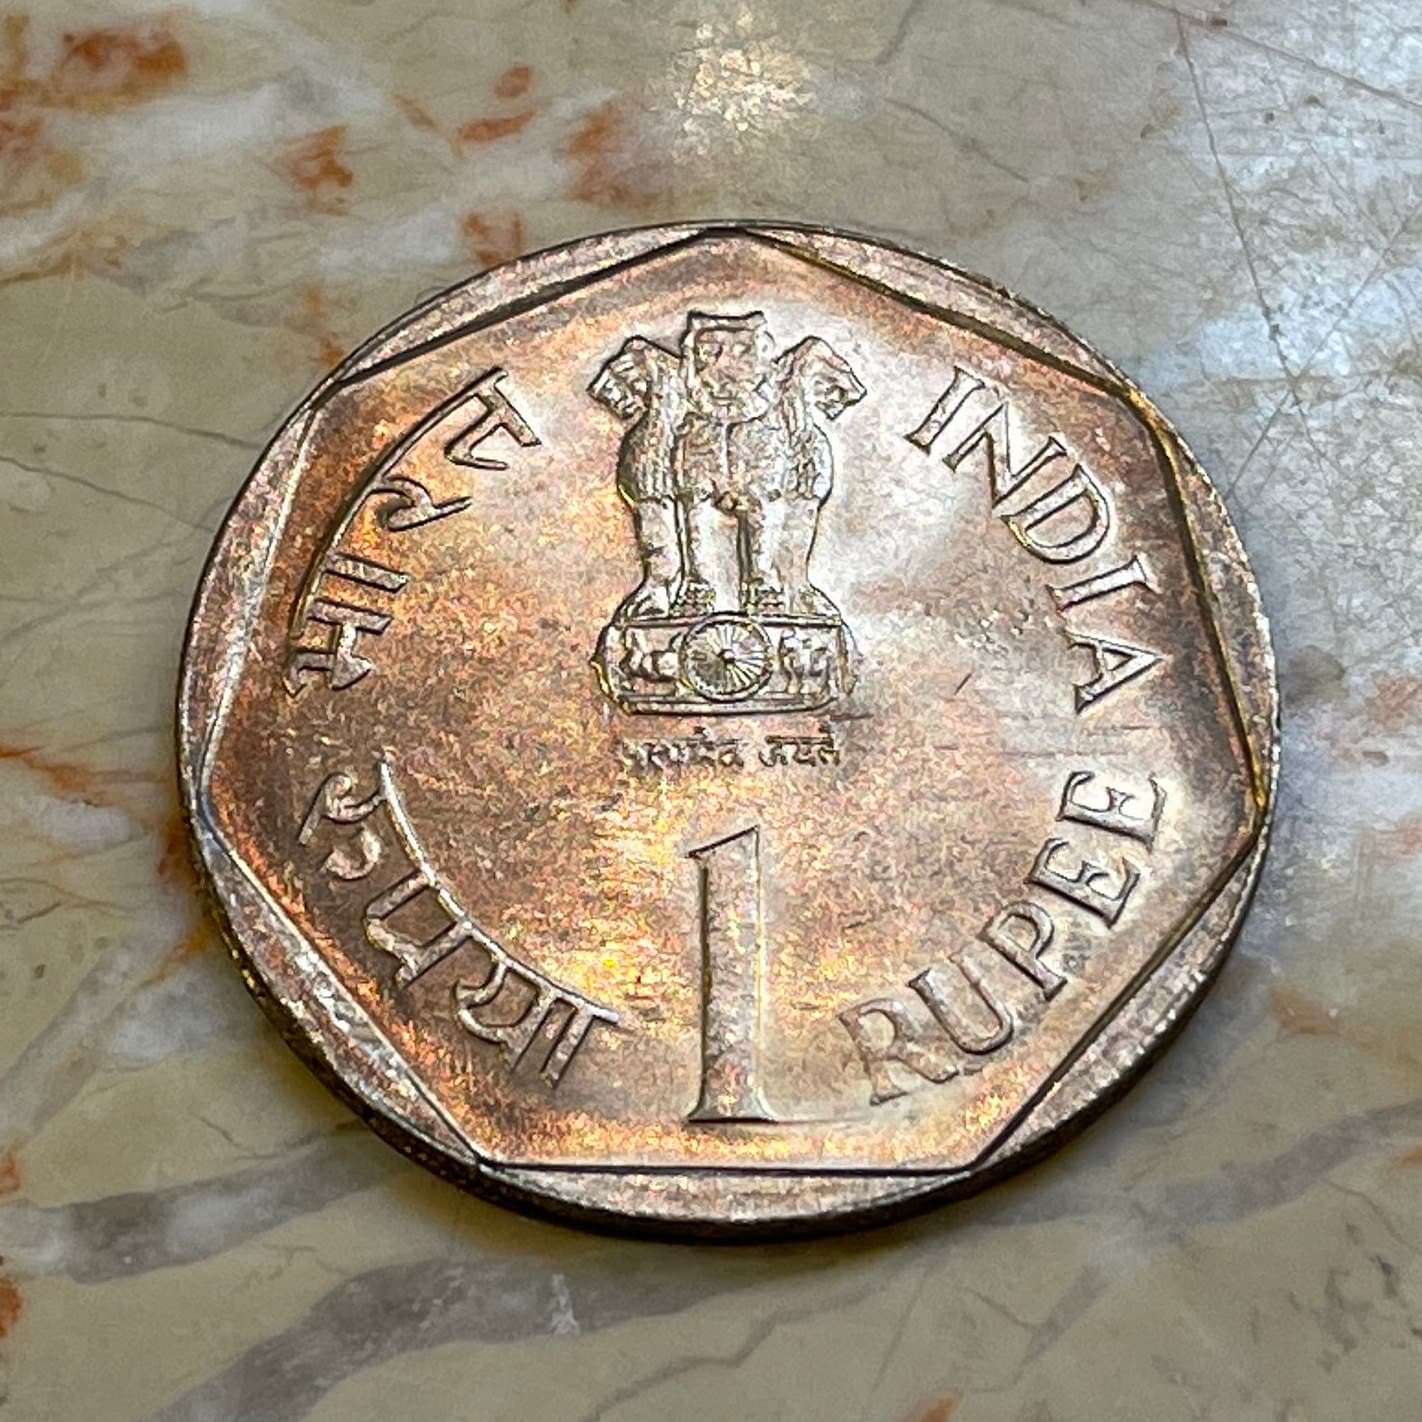 Rainfed Farming & Ashoka Lion Capitol 1 Rupee India Authentic Coin Money for Jewelry and Craft Making FAO